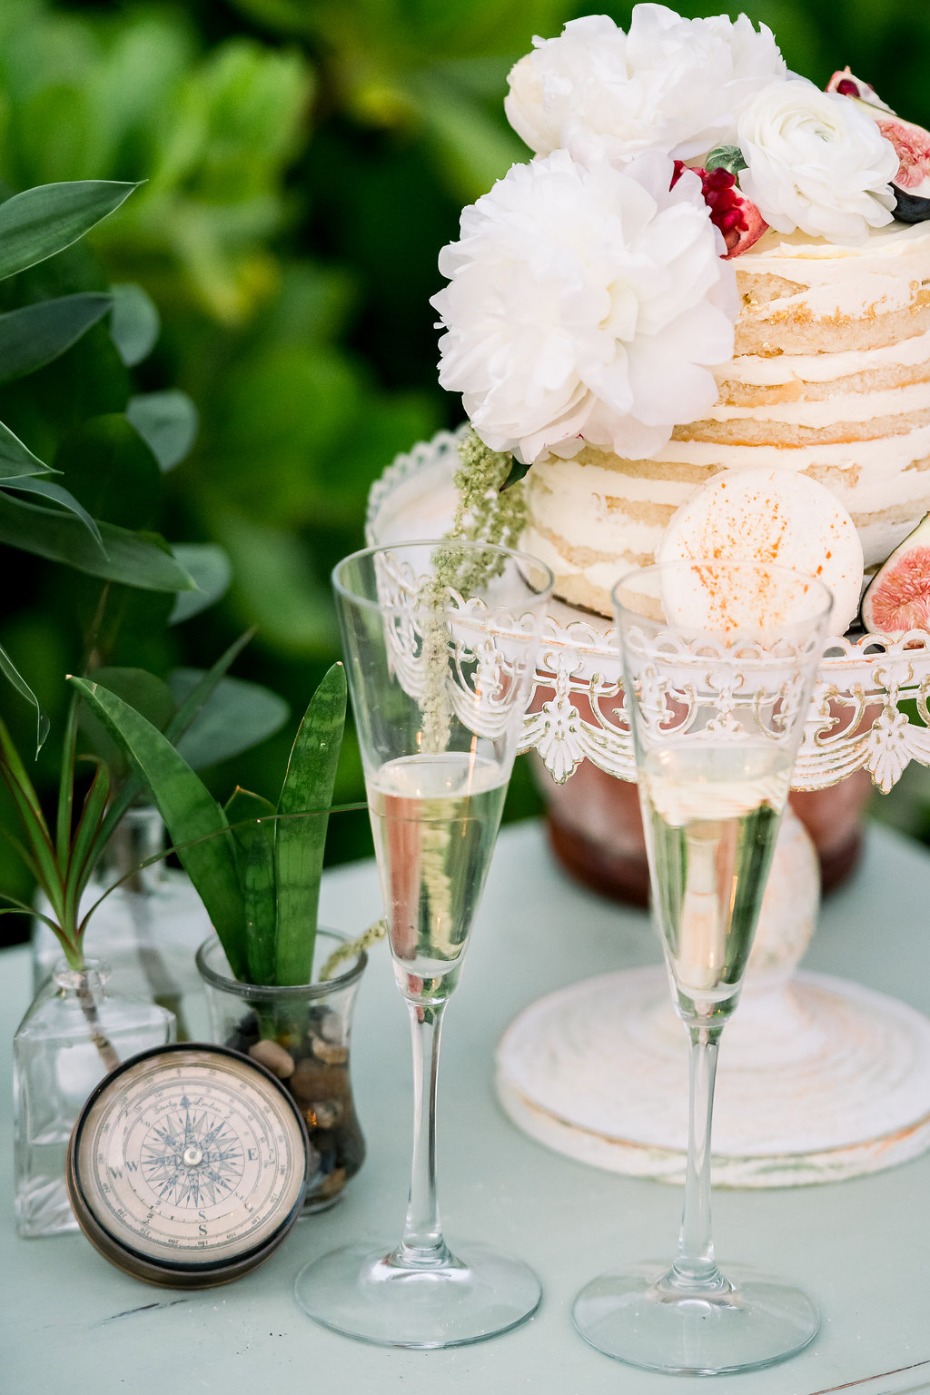 Cayman Island Beach Wedding Cake and Champagne